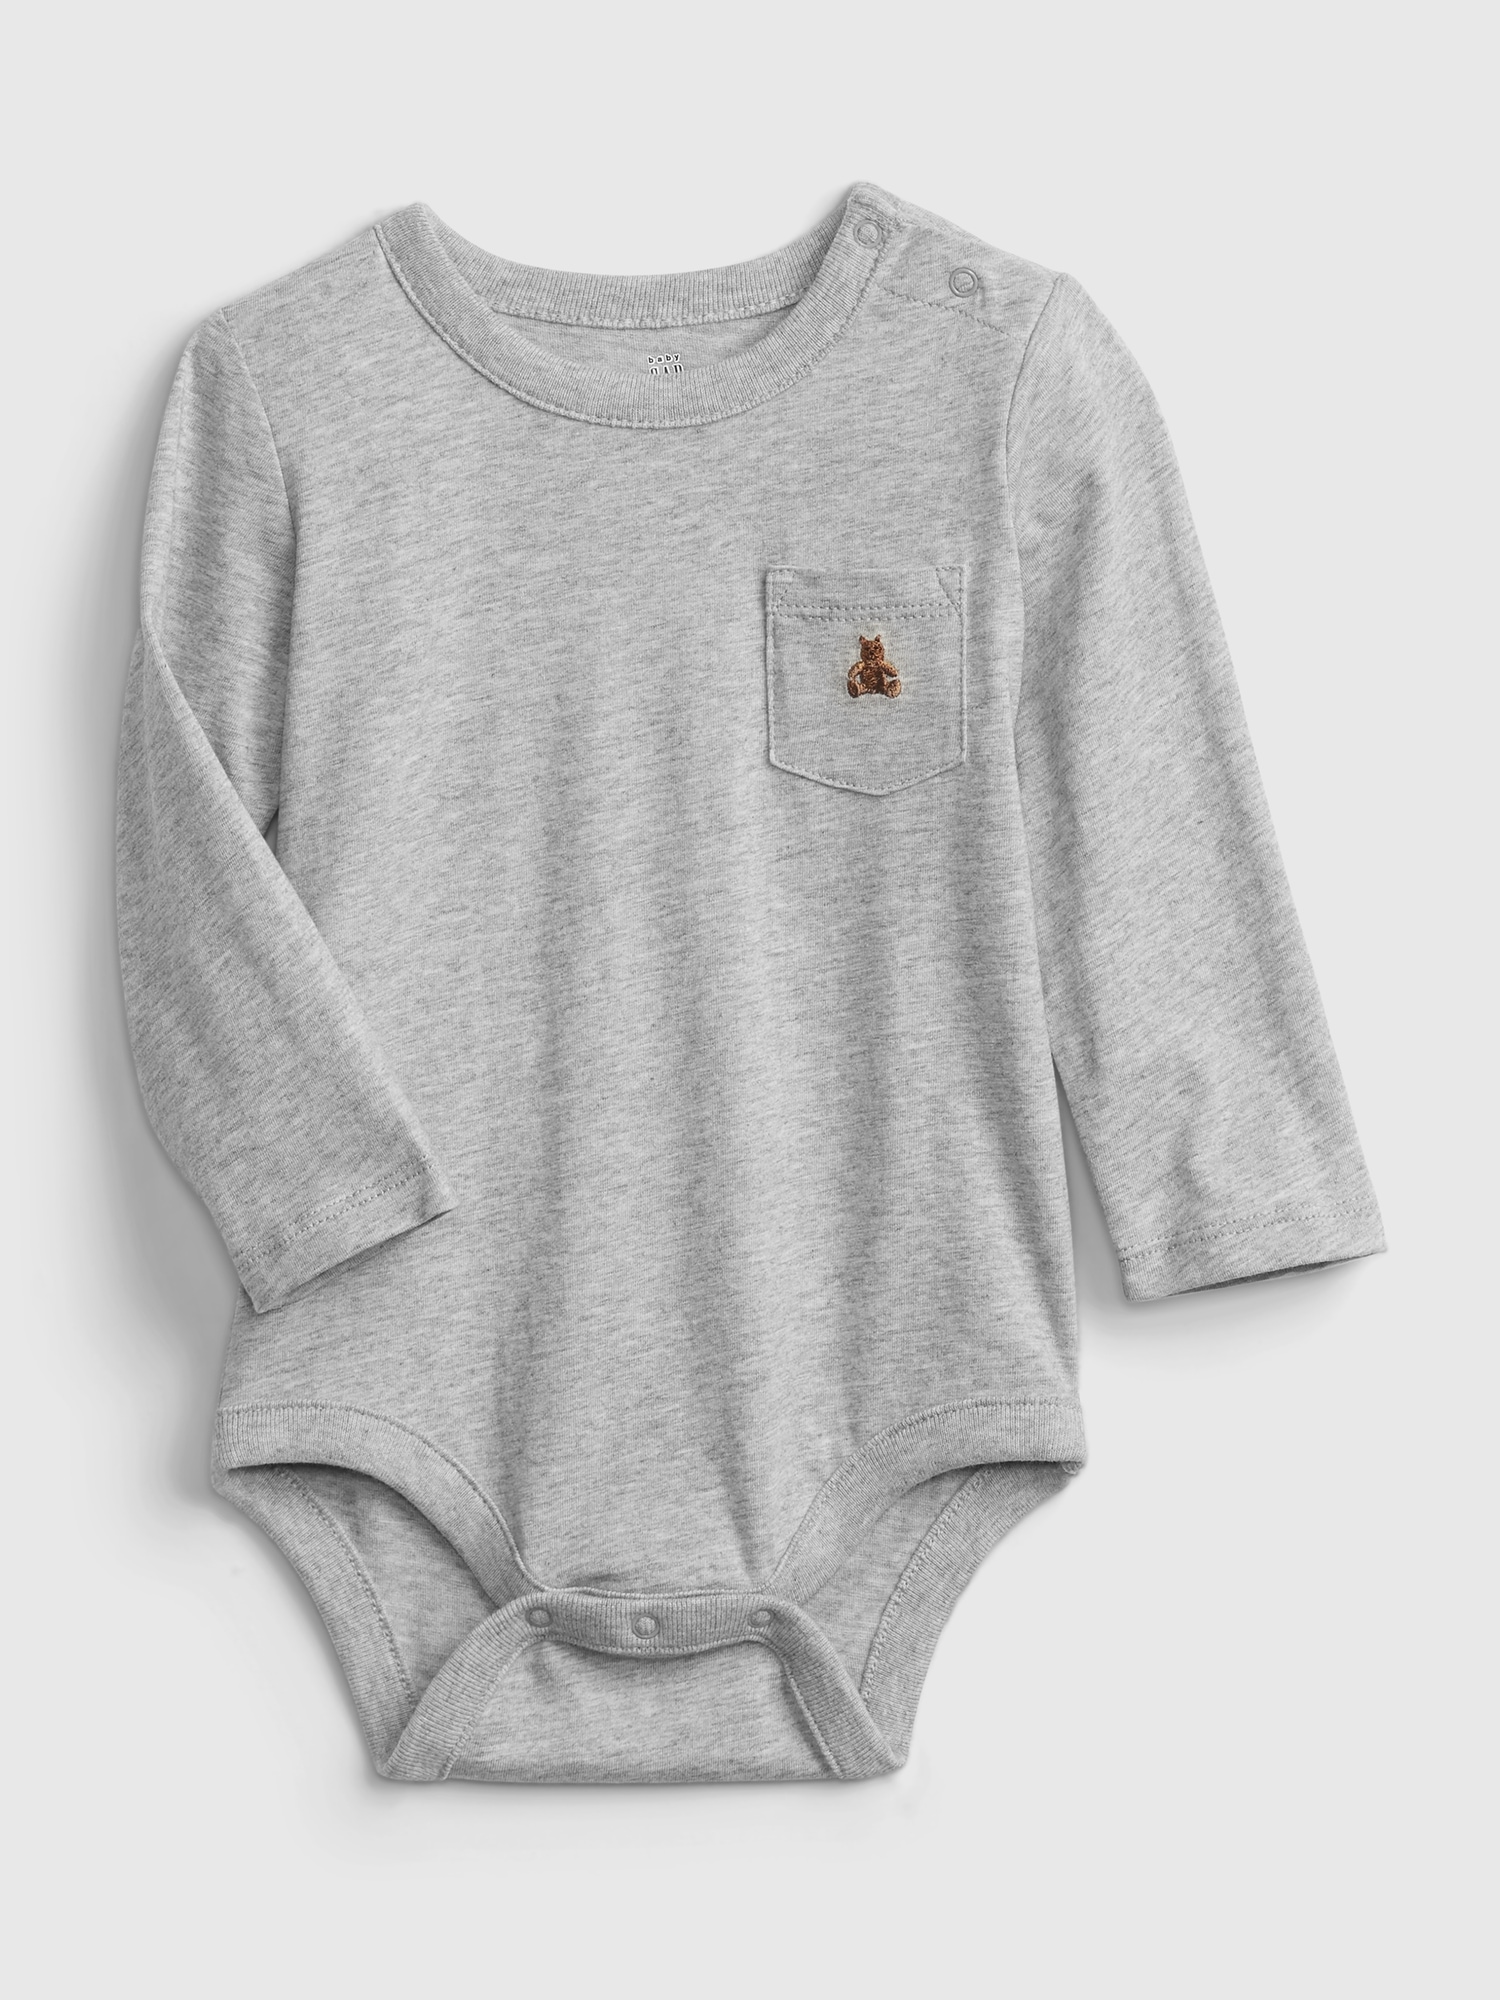 Gap Kids' Baby 100% Organic Cotton Mix And Match Bodysuit In Light Gray